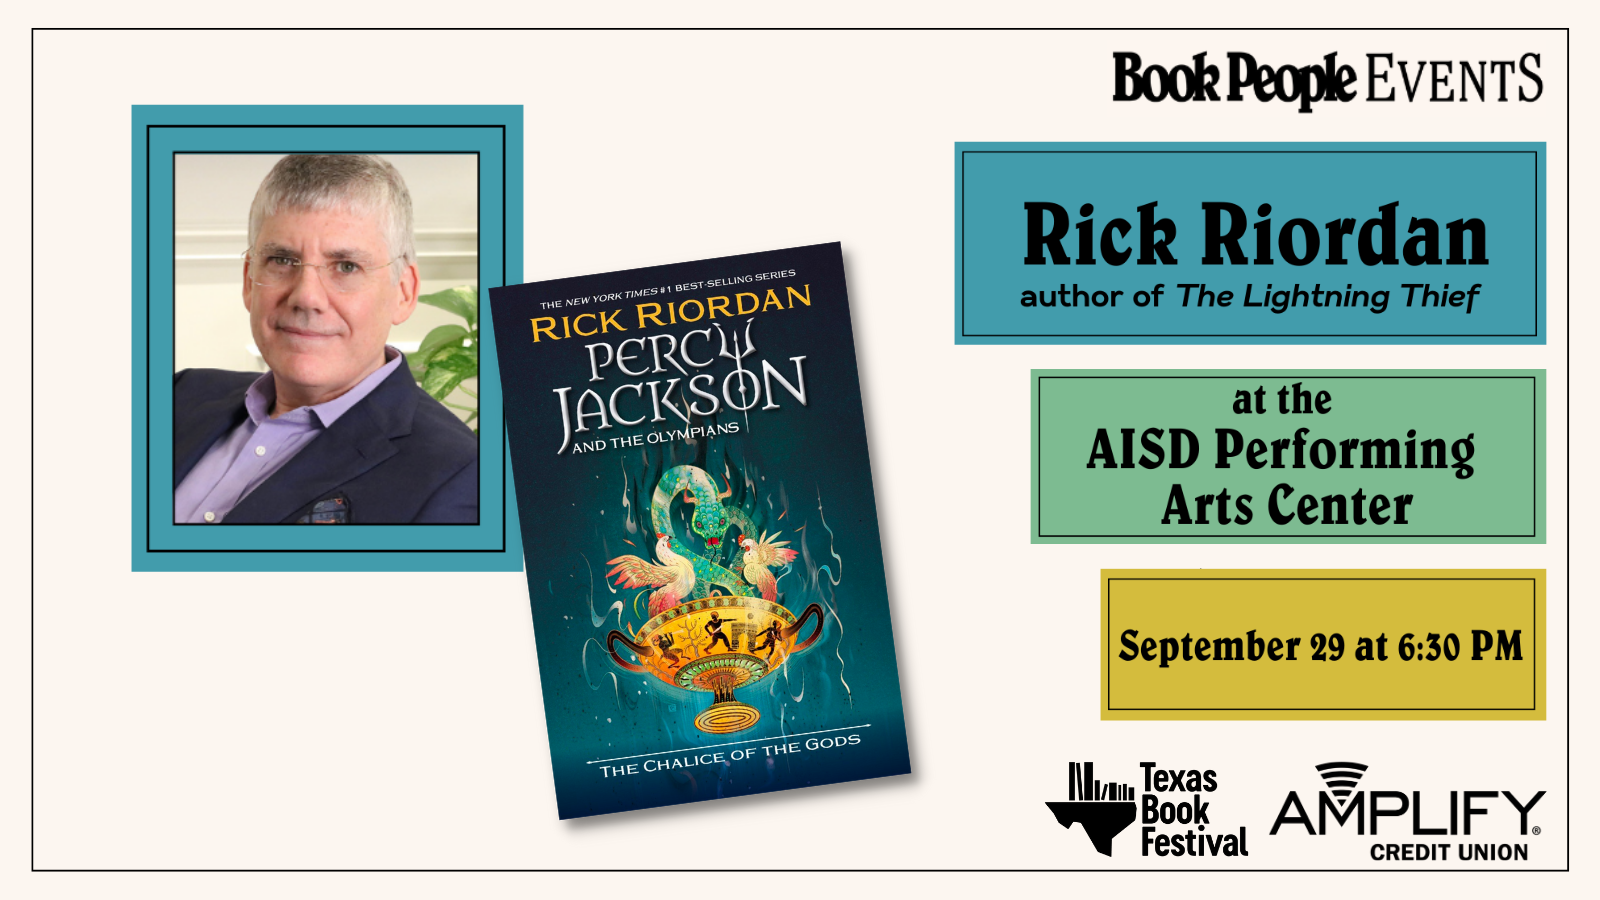 BookPeople & Texas Book Festival Present Rick Riordan: THE CHALICE OF THE GODS